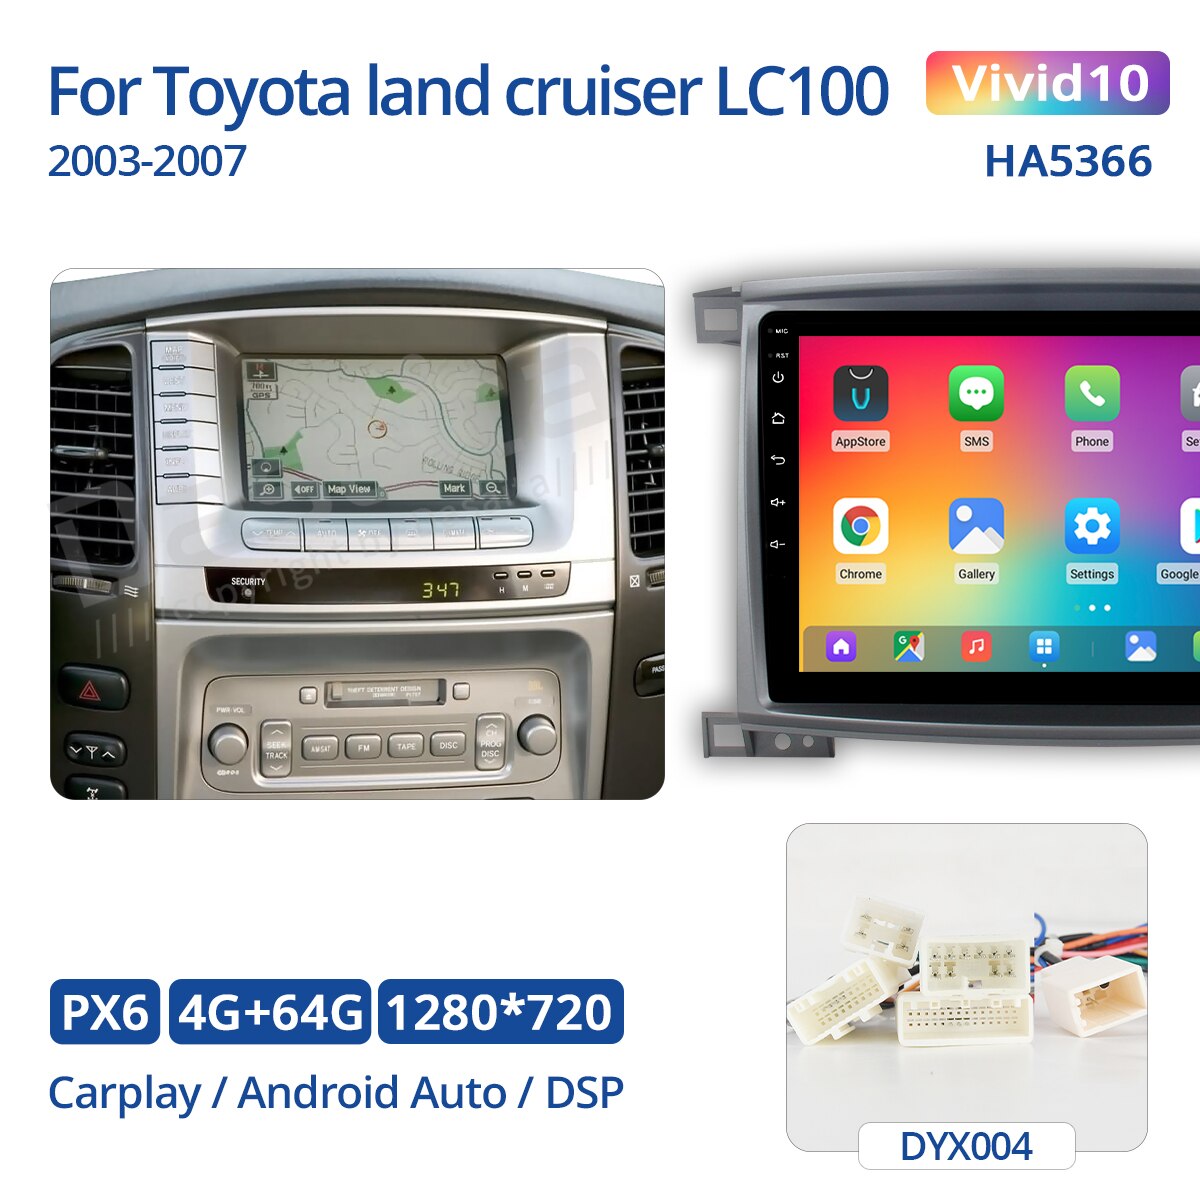 Dasaita Vivid for Toyota LC 100 Land Cruiser 100 2003 Radio 1 Din Android 10.0 Car Stereo GPS Navigation 1280*720 IPS 4G 64G